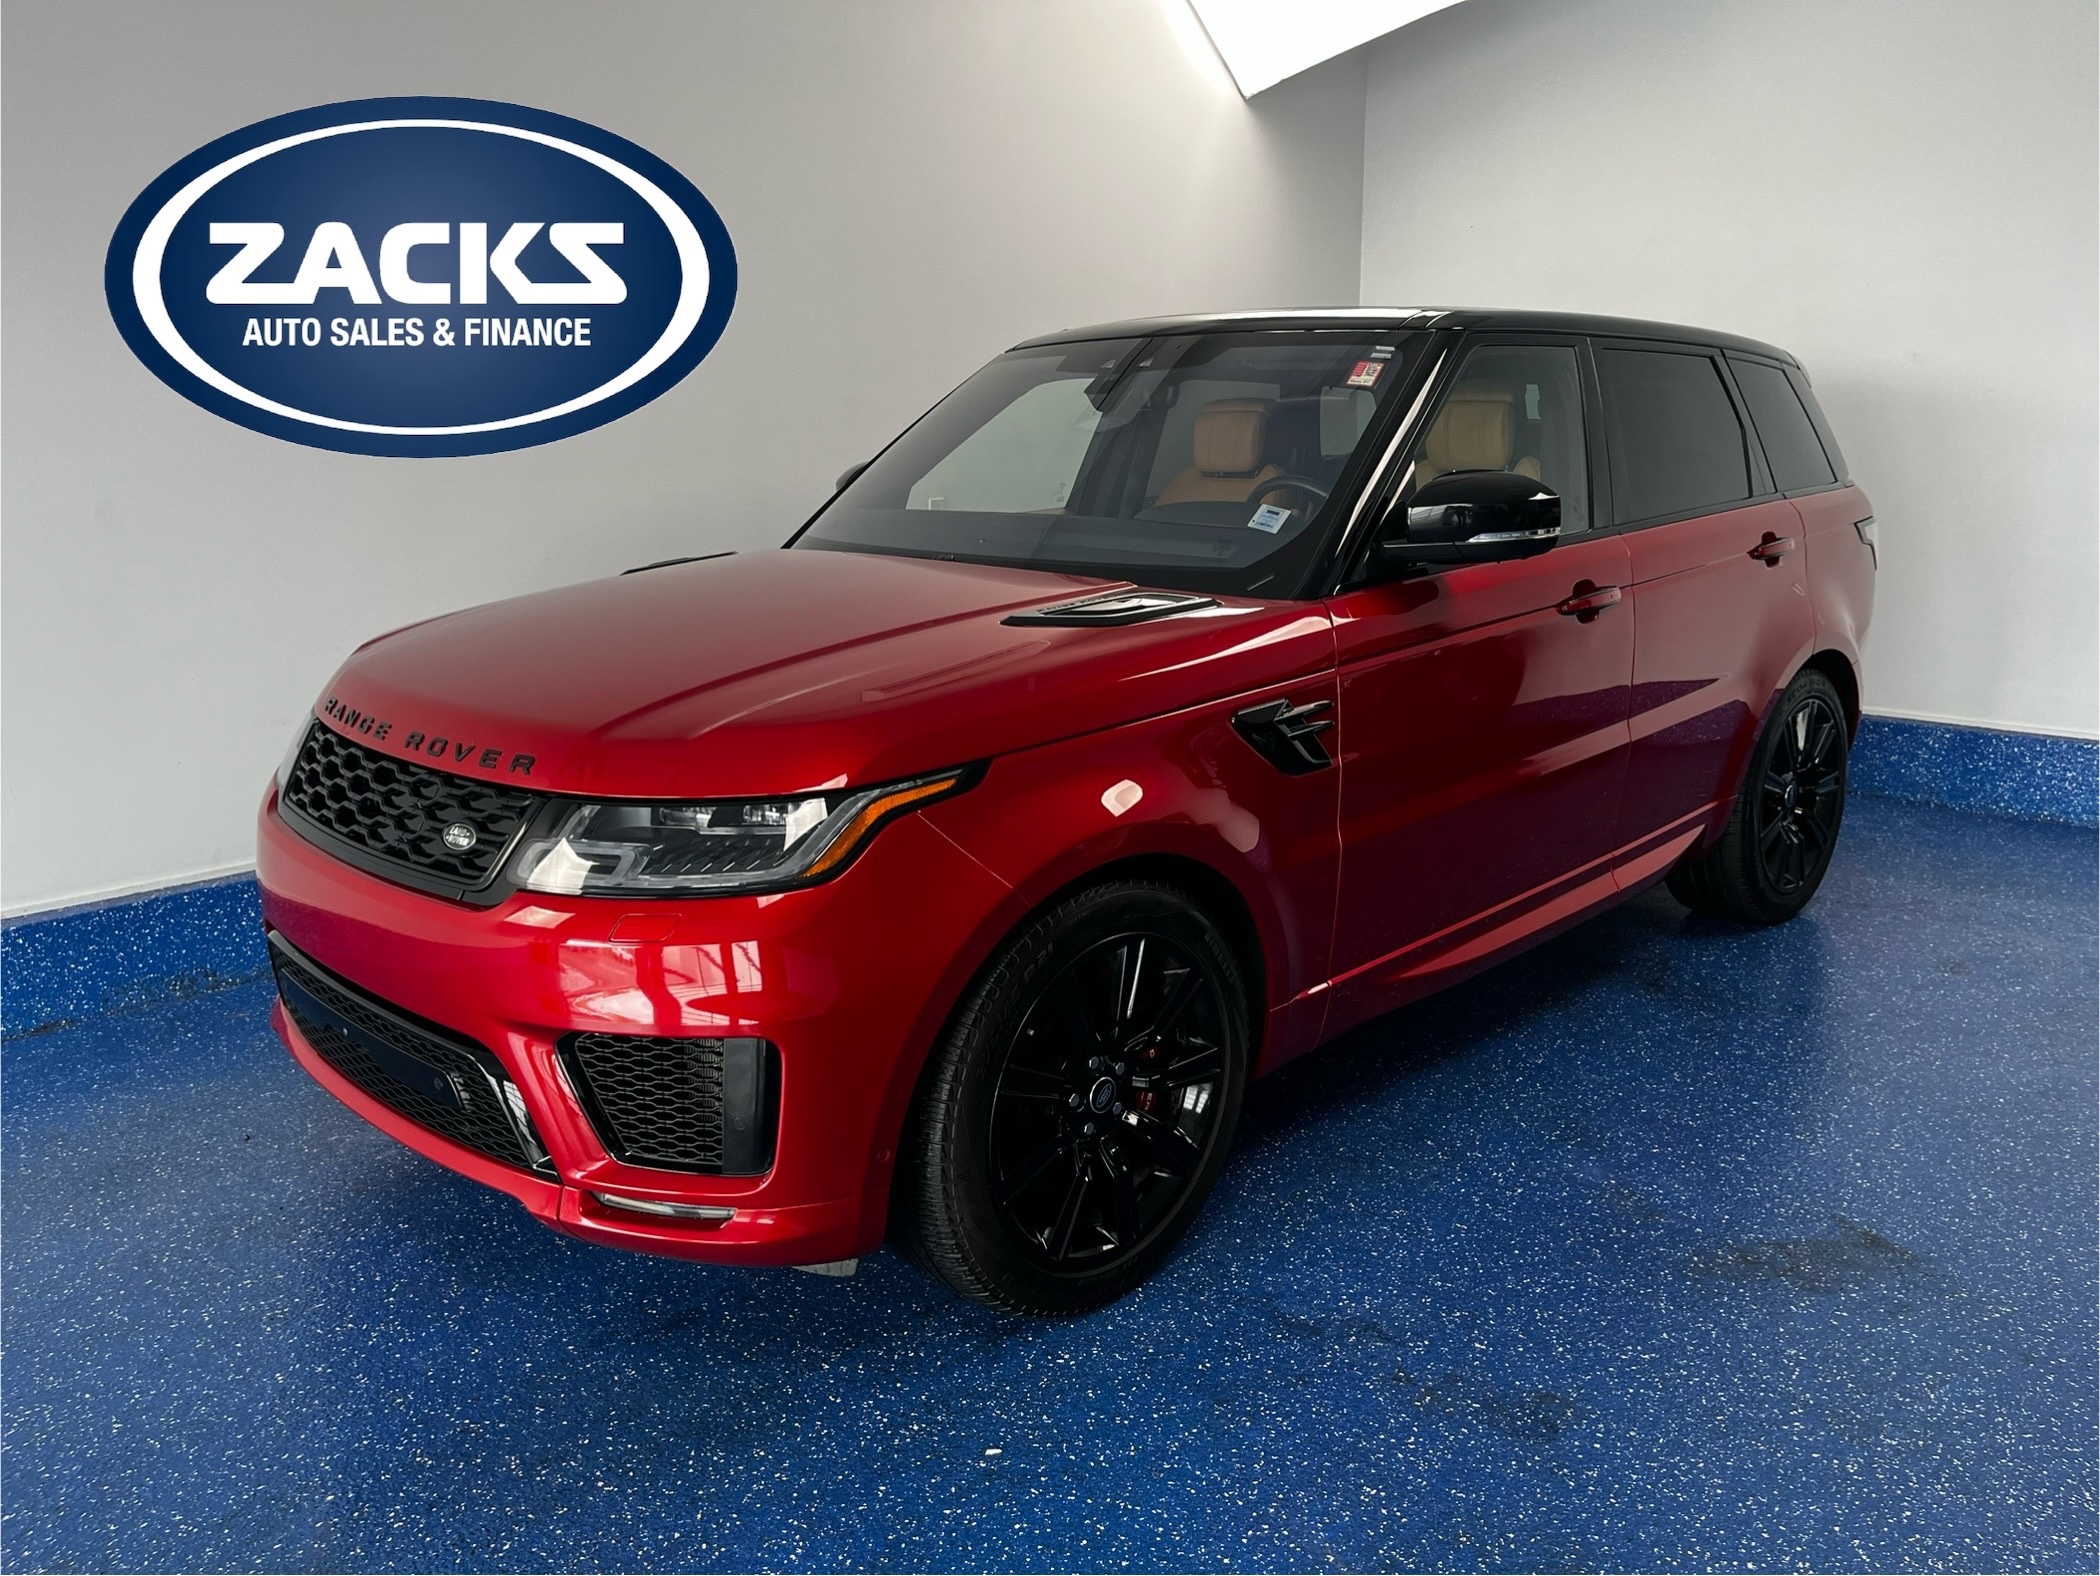 2021 Land Rover Range Rover Sport Autobiography | Plugin Electric | Zacks Certifiedc